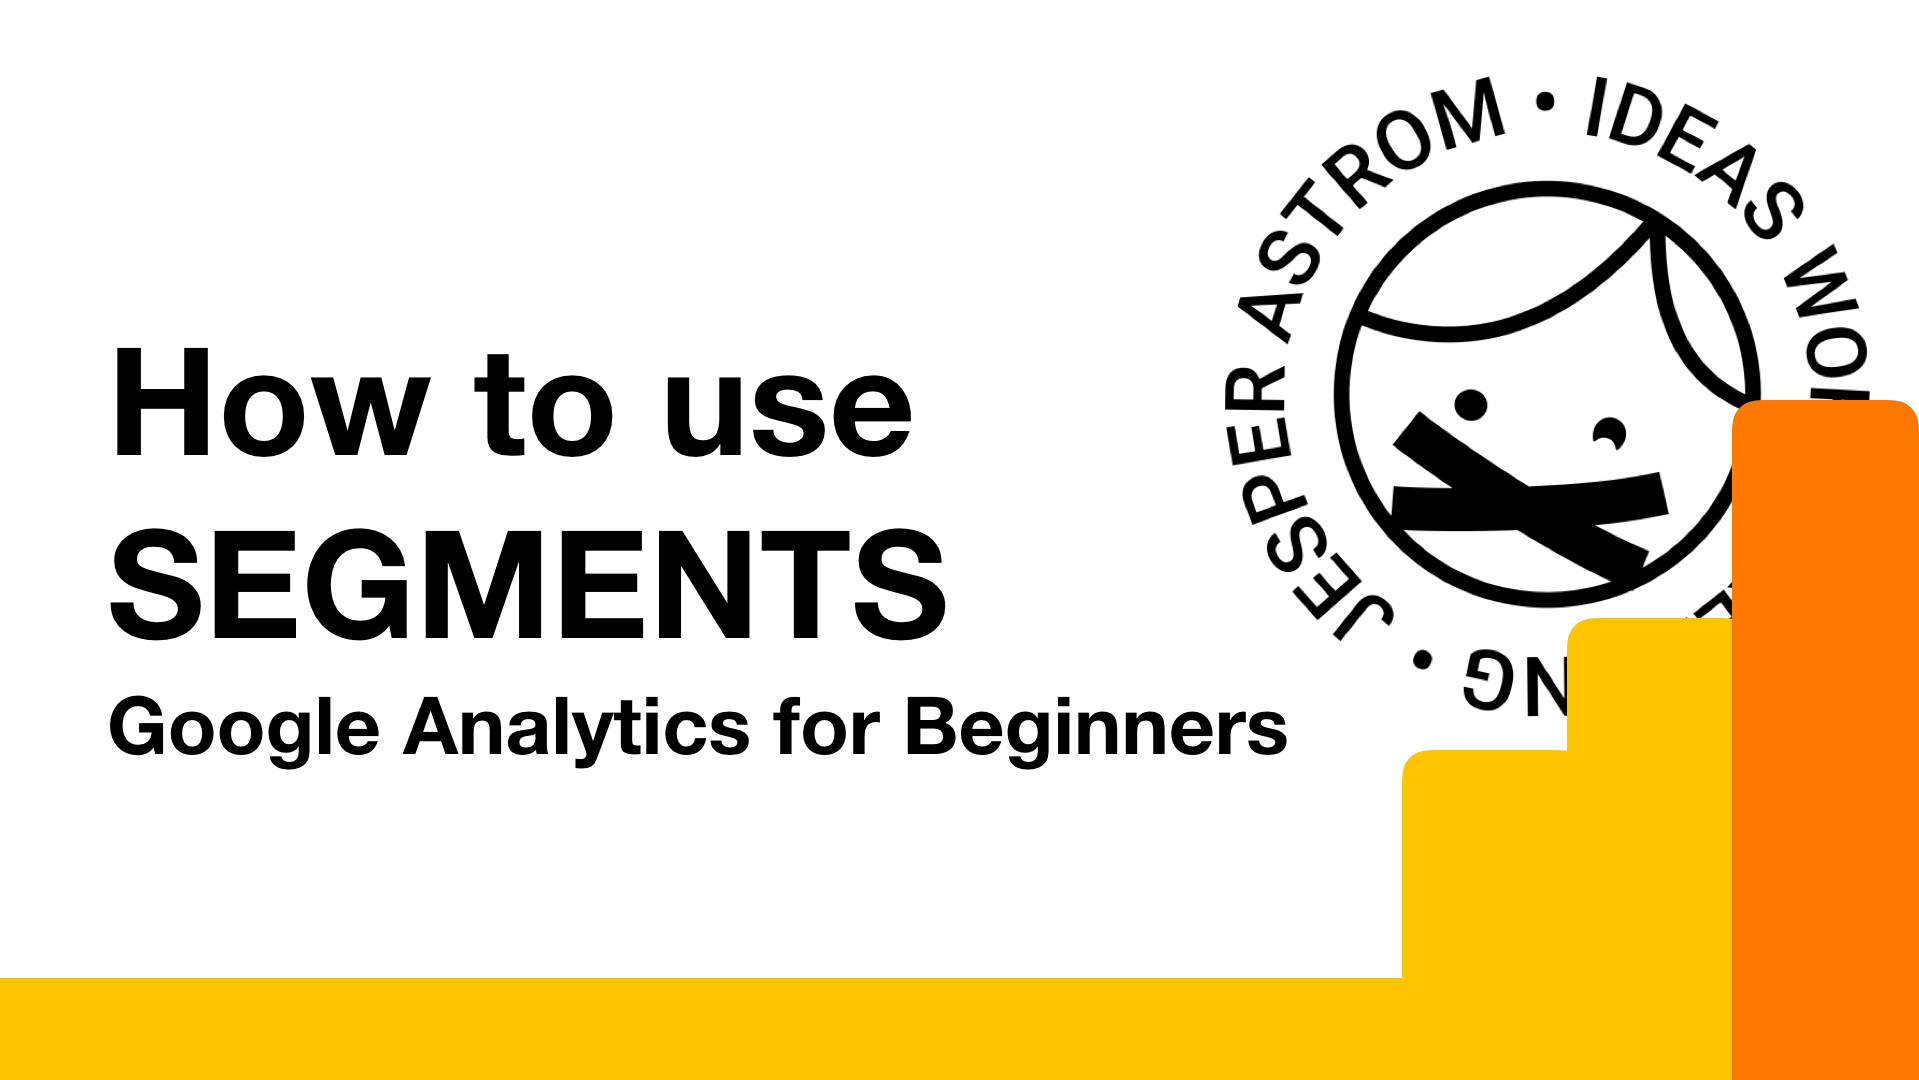 How to use segments in Google Analytics